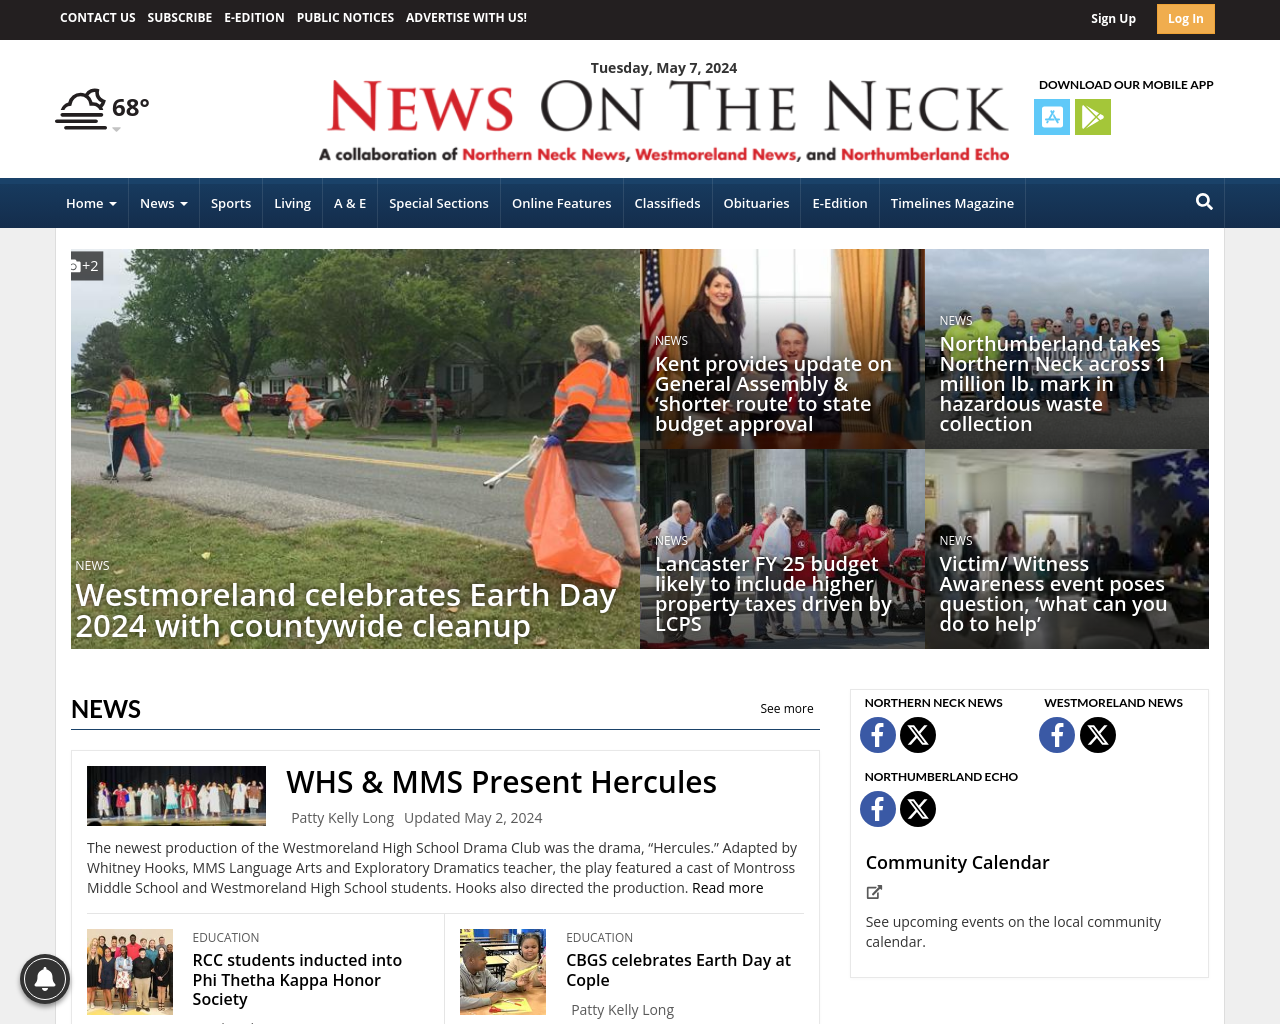 northernnecknews.com